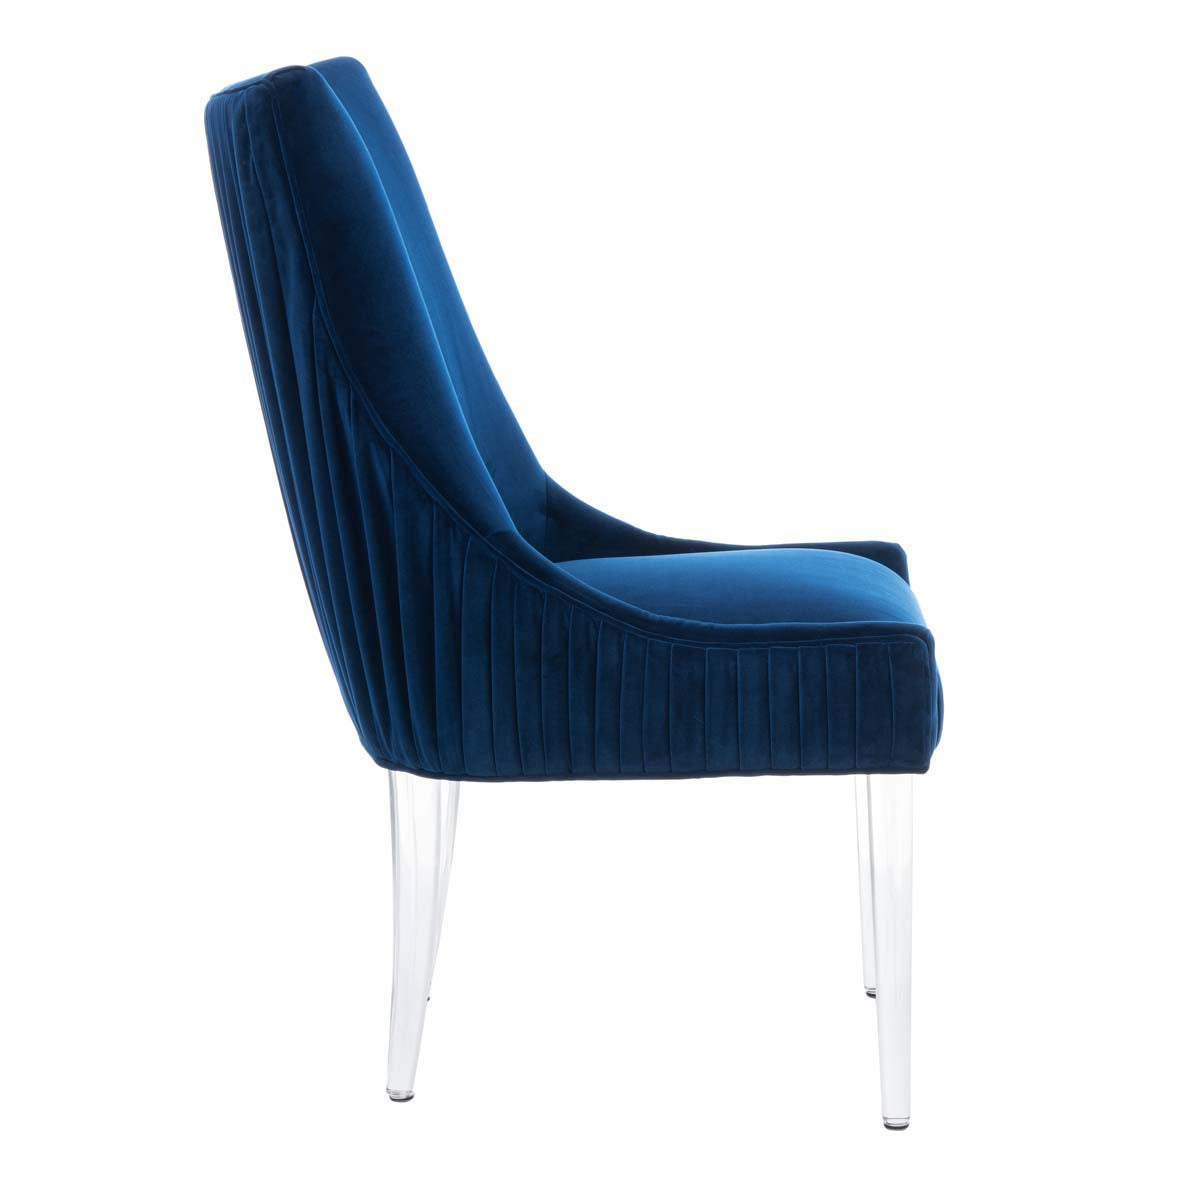 Safavieh Couture De Luca Acrylic Leg Dining Chair - Navy